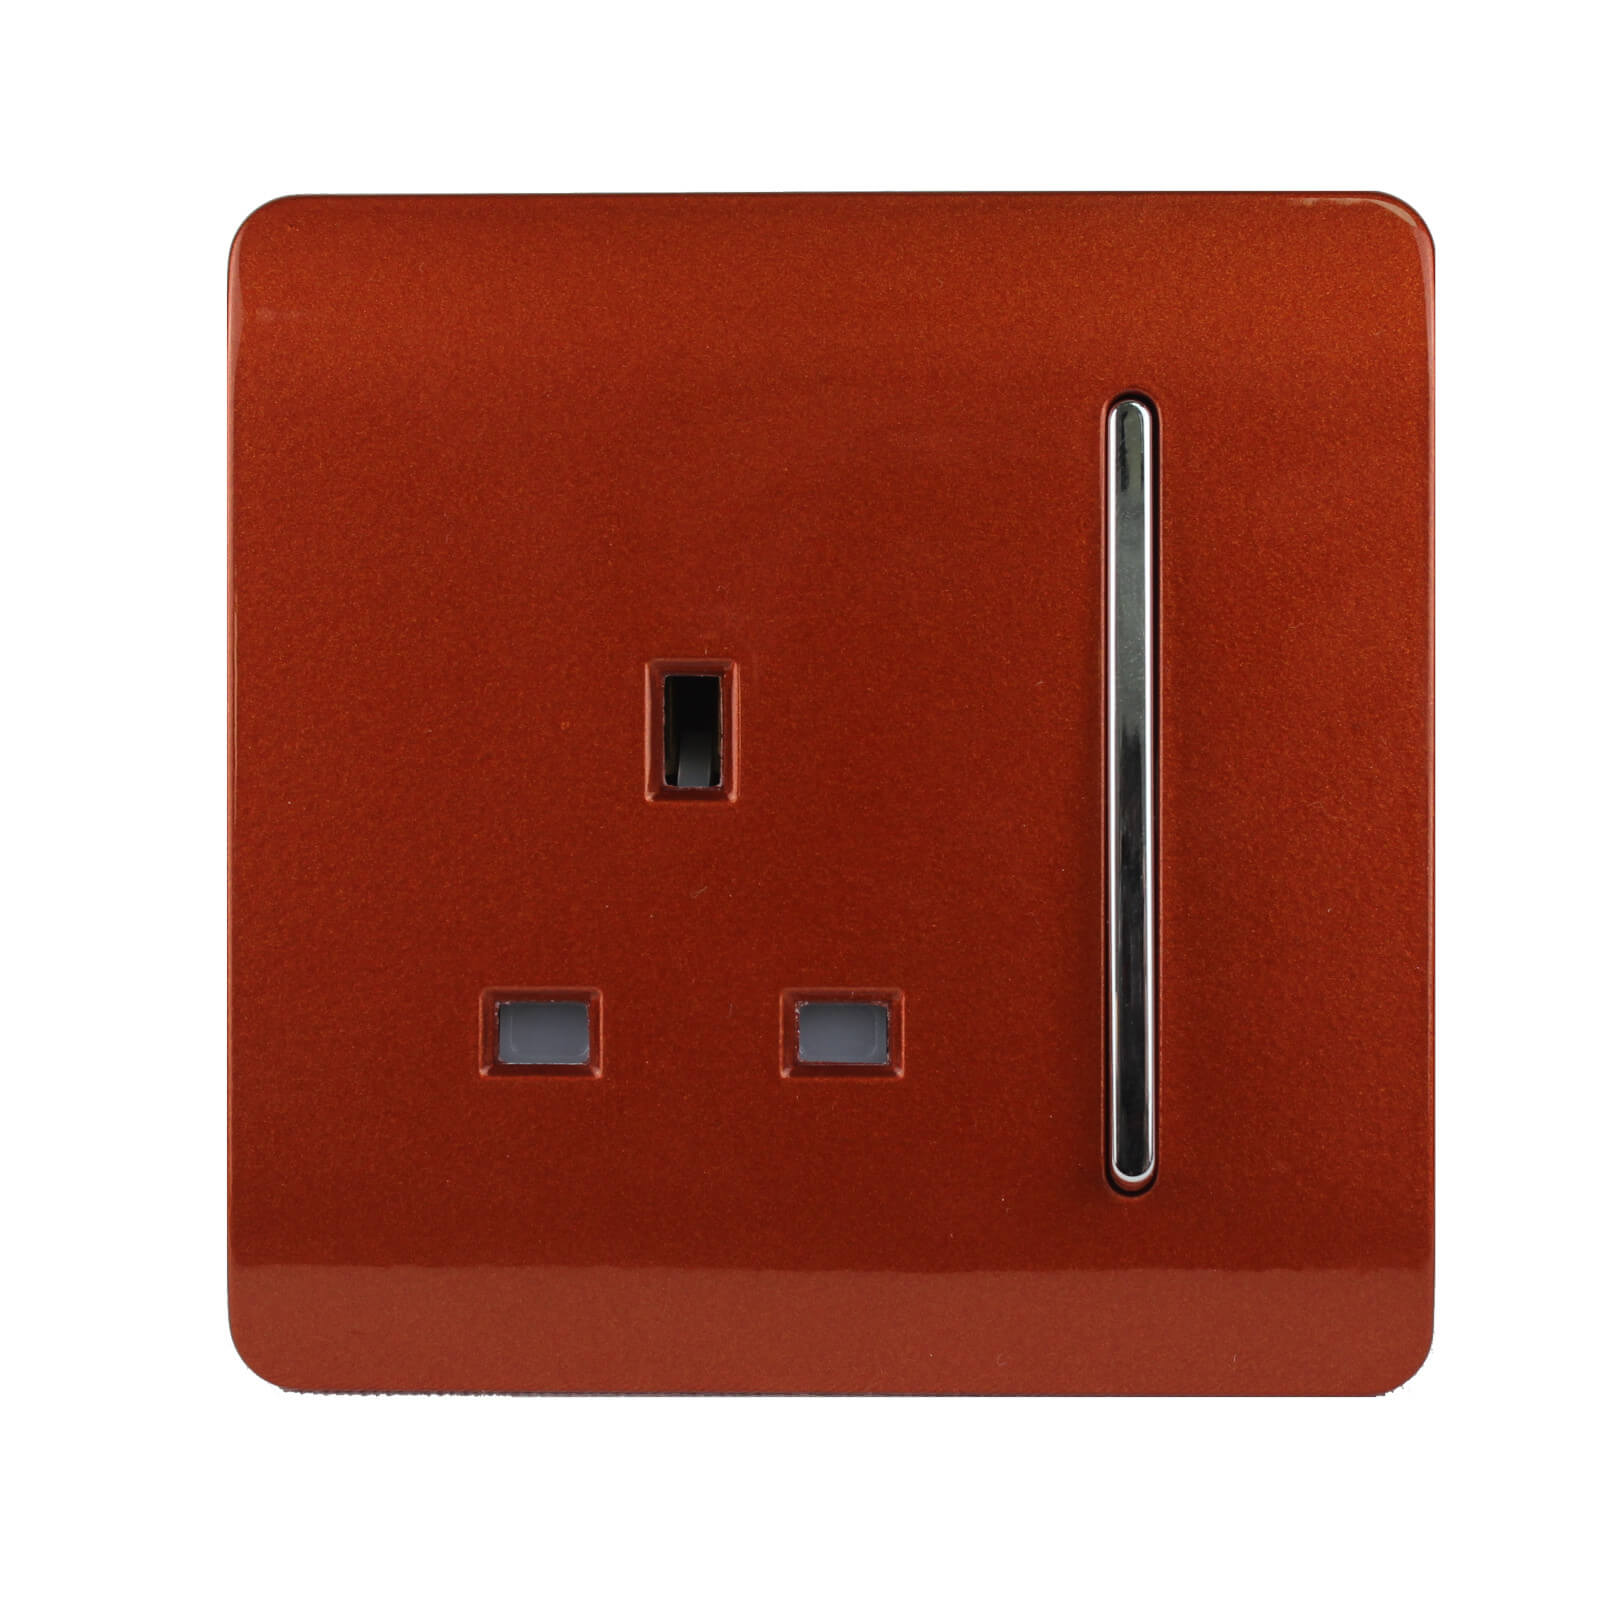 Trendi Switch 1 Gang 13A Plug Light Switch in Screwless Copper